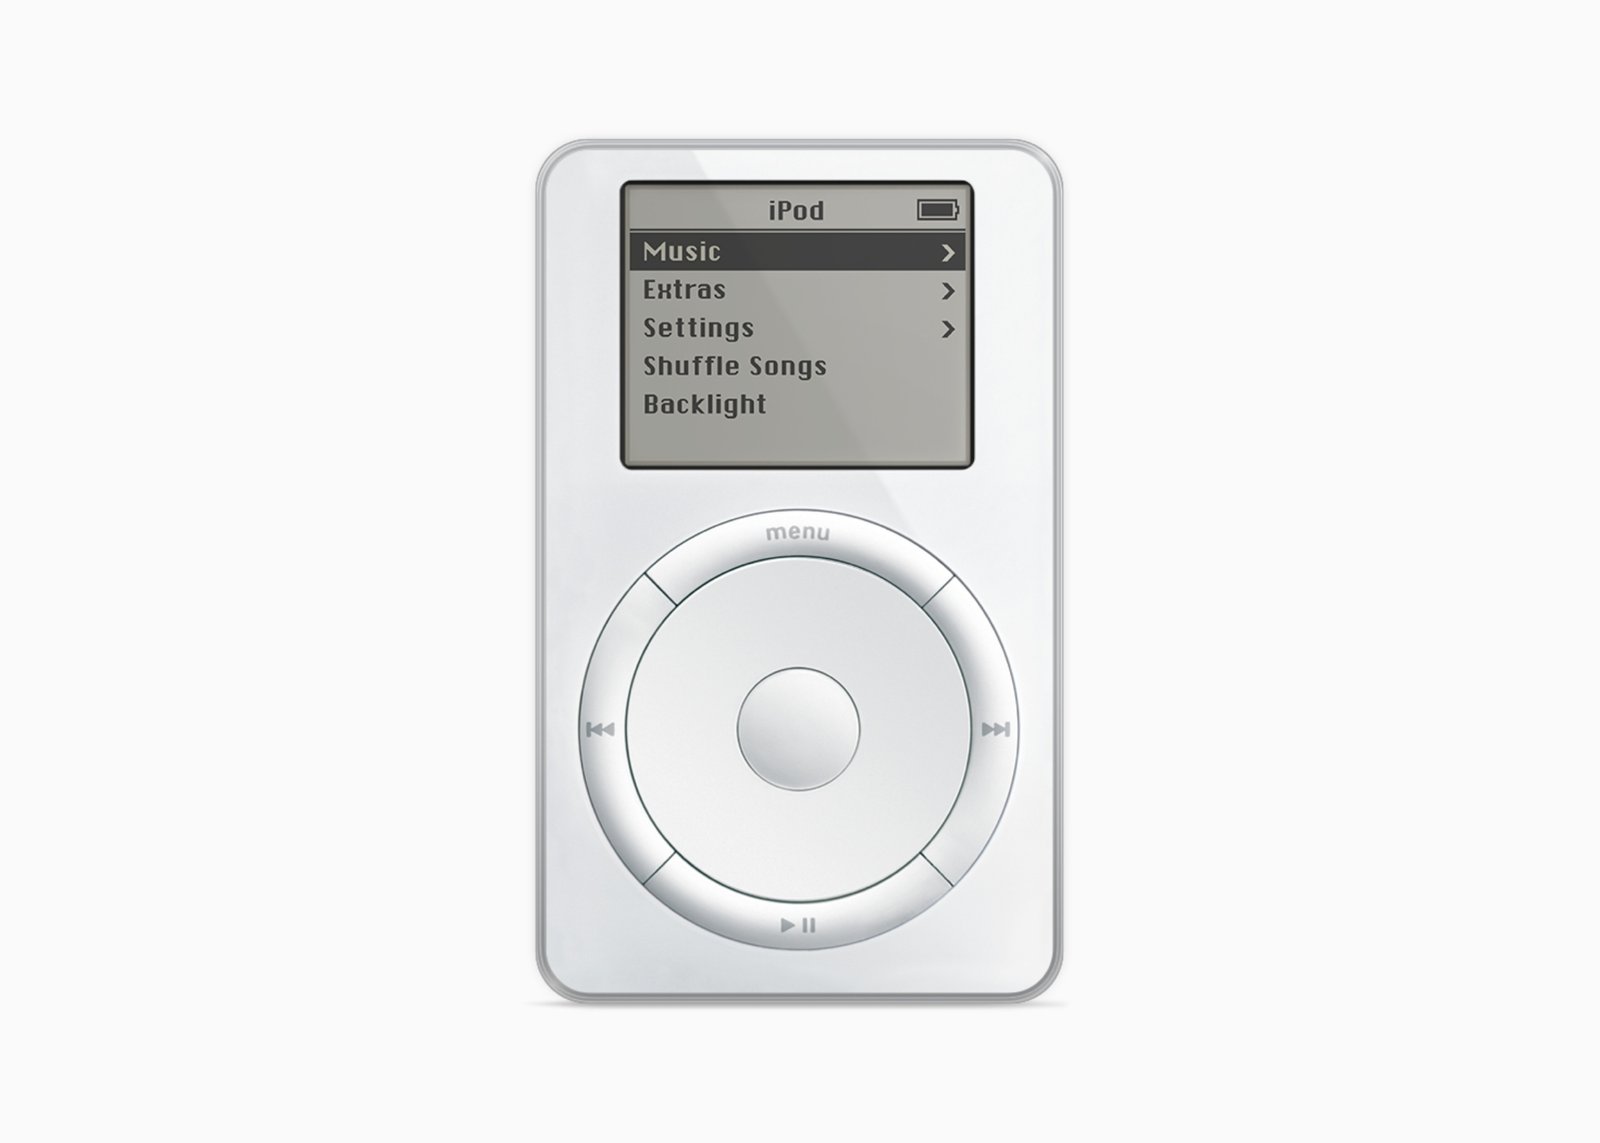 iPod first generation